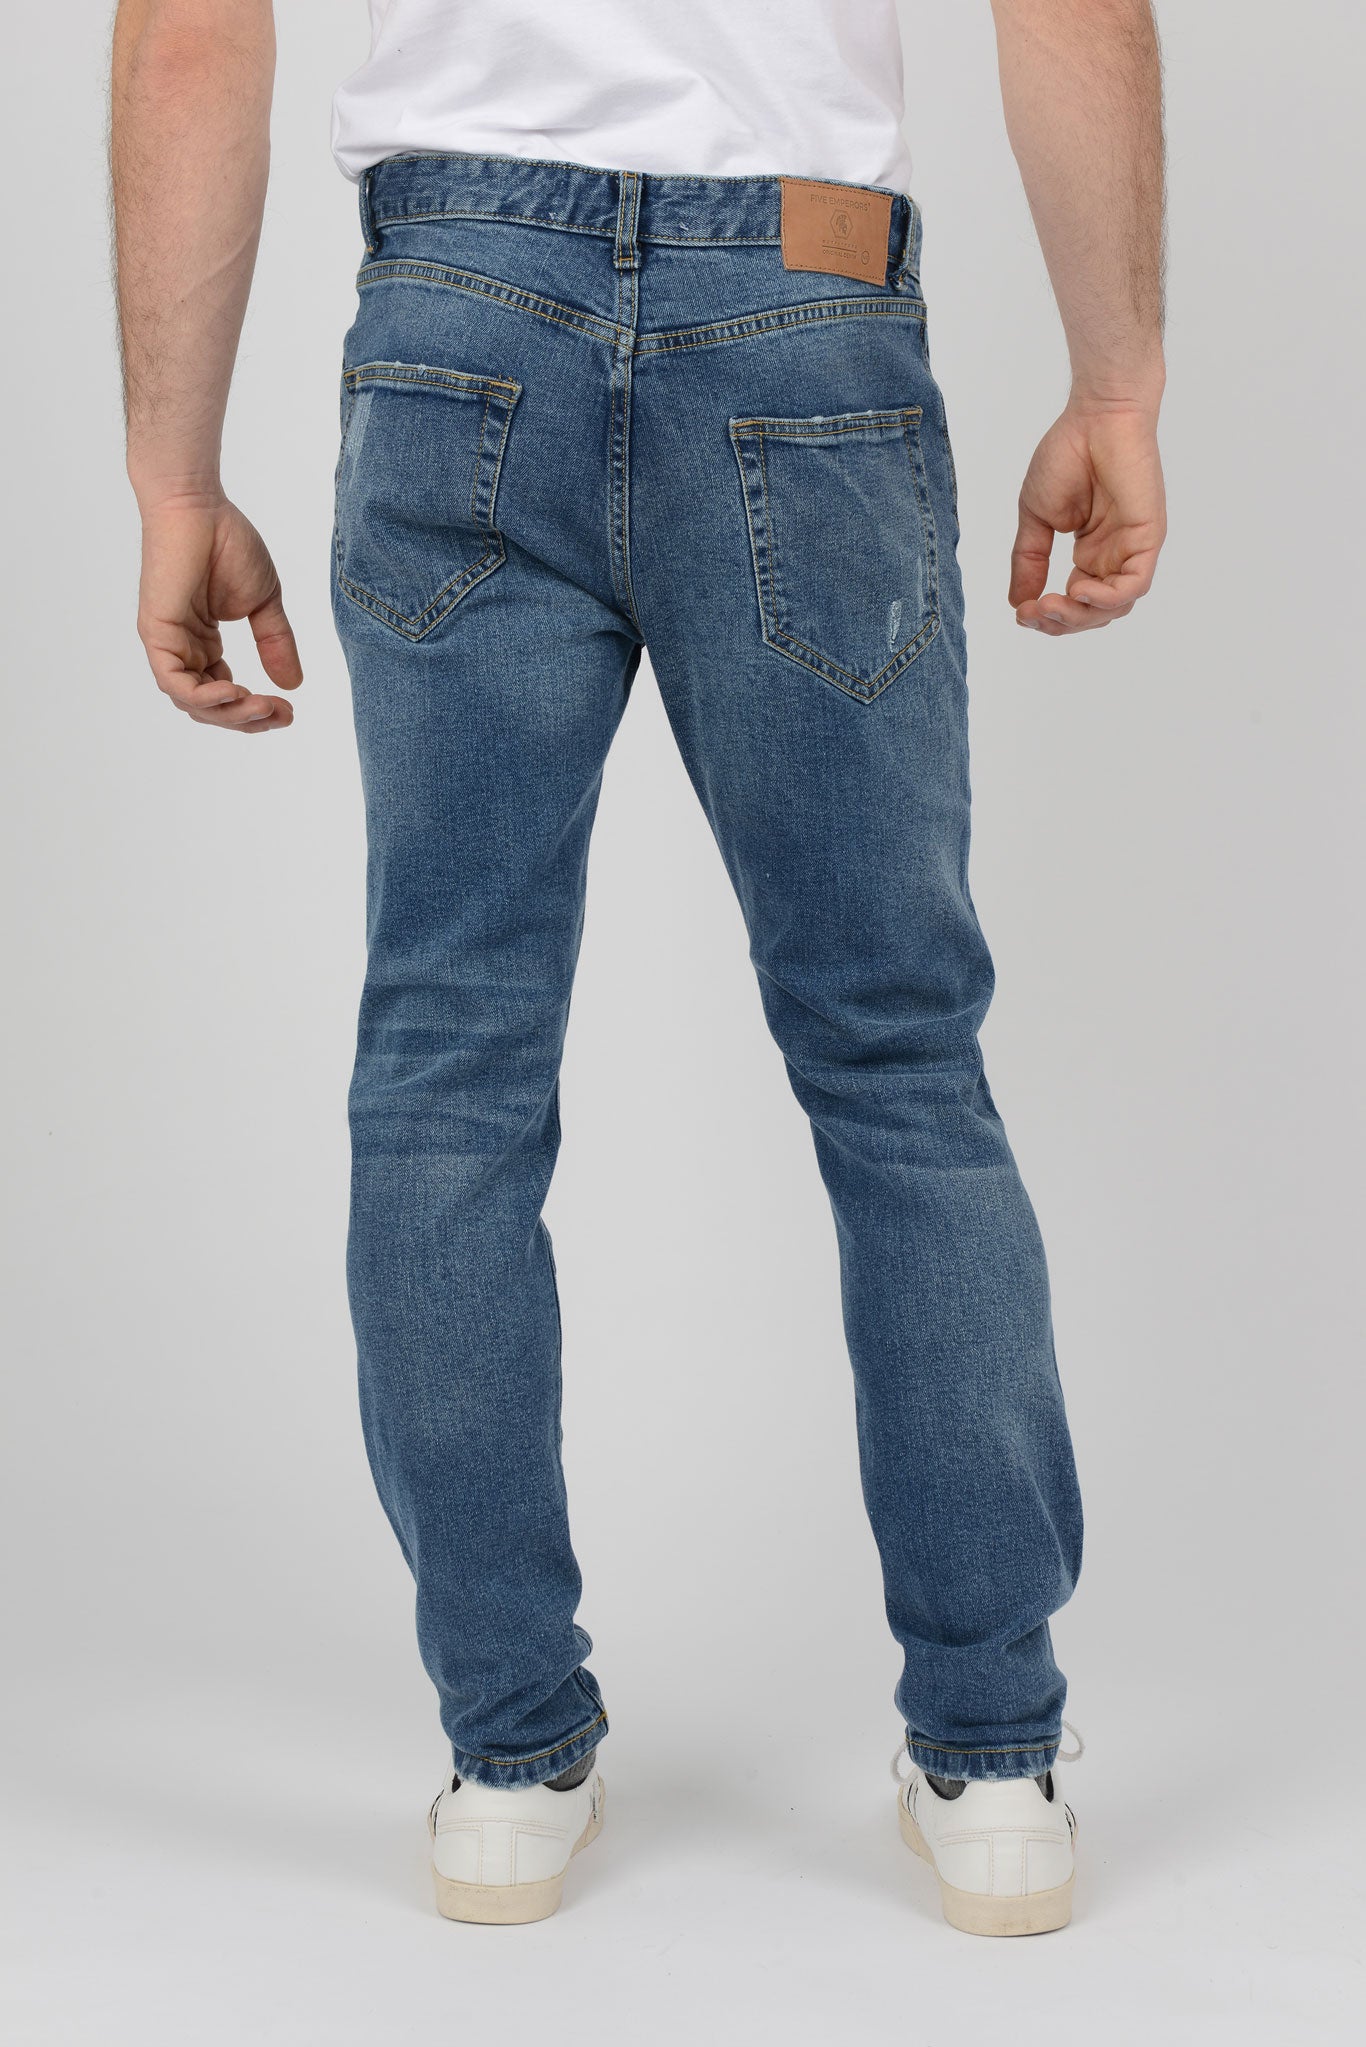 Apollo Men’s Slim Fit Tapered Jeans – Vintage Wash